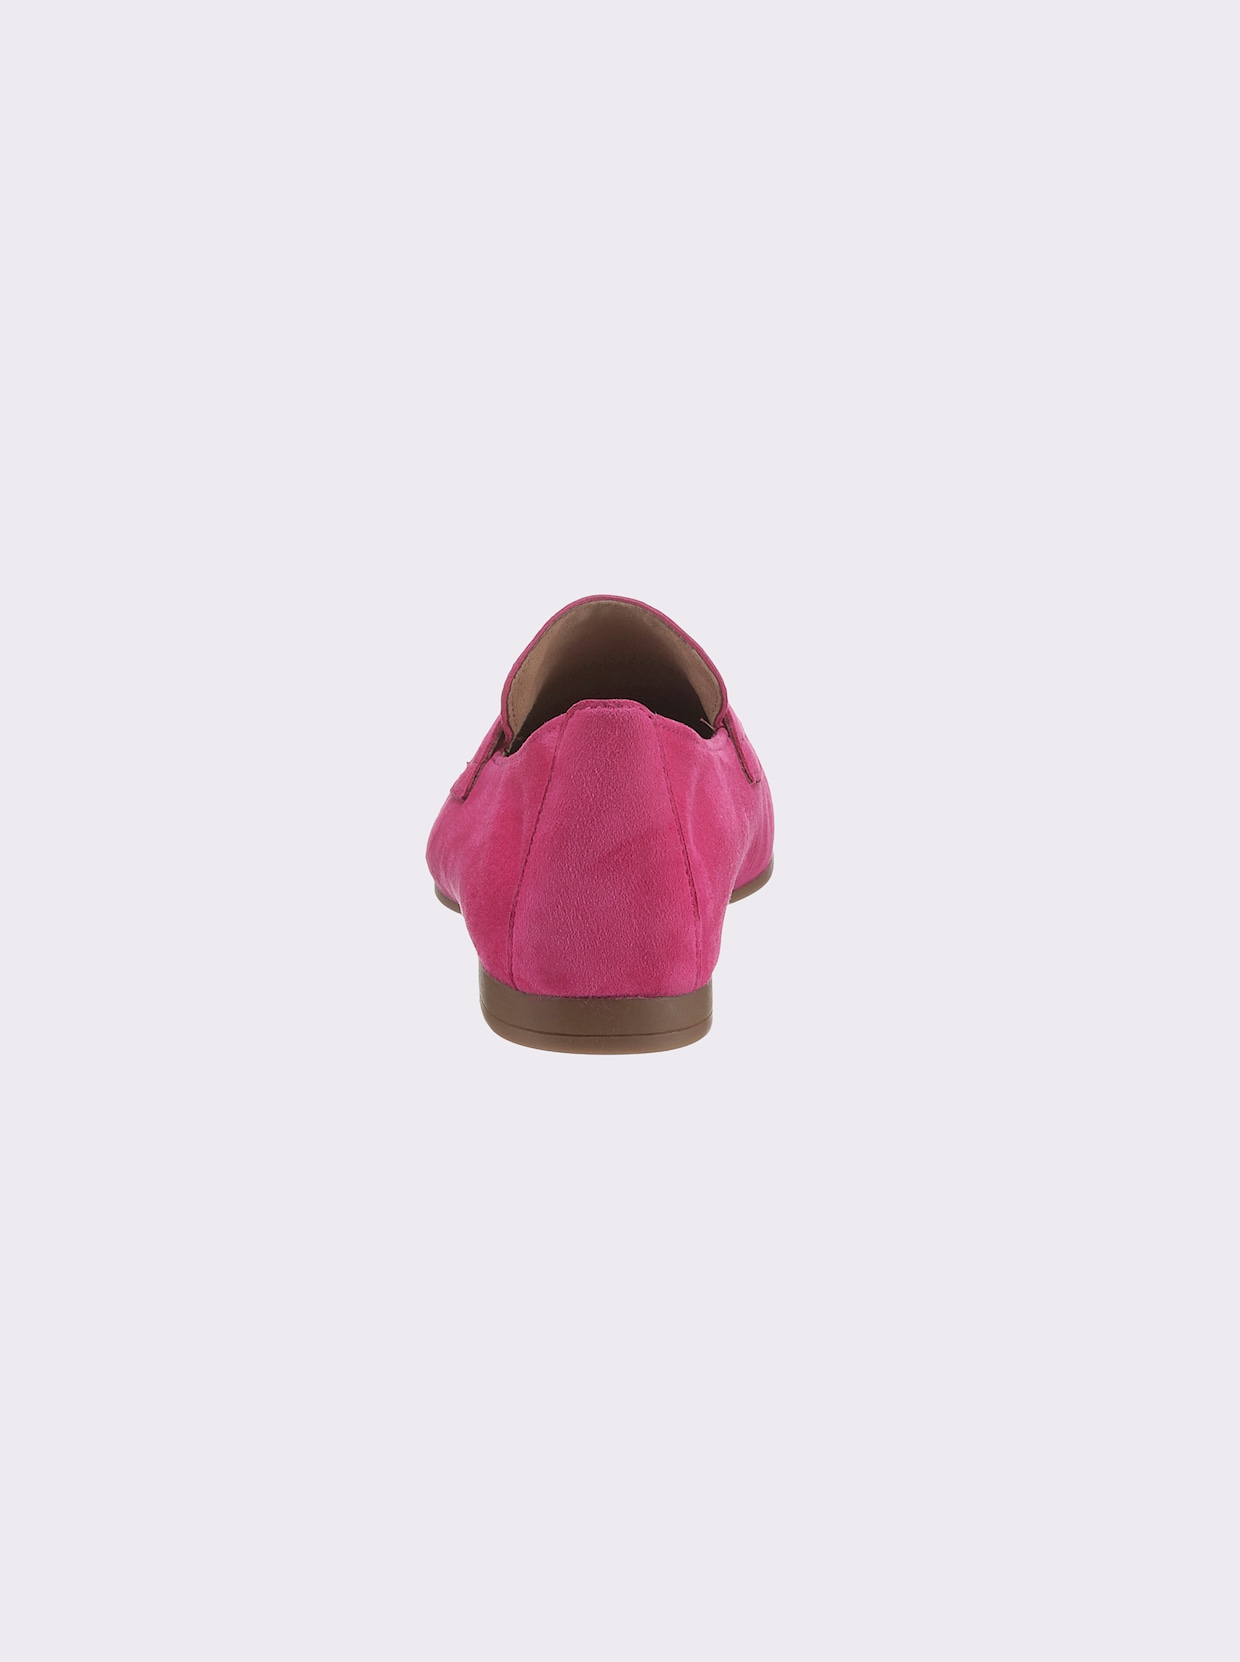 Gabor Slipper - pink